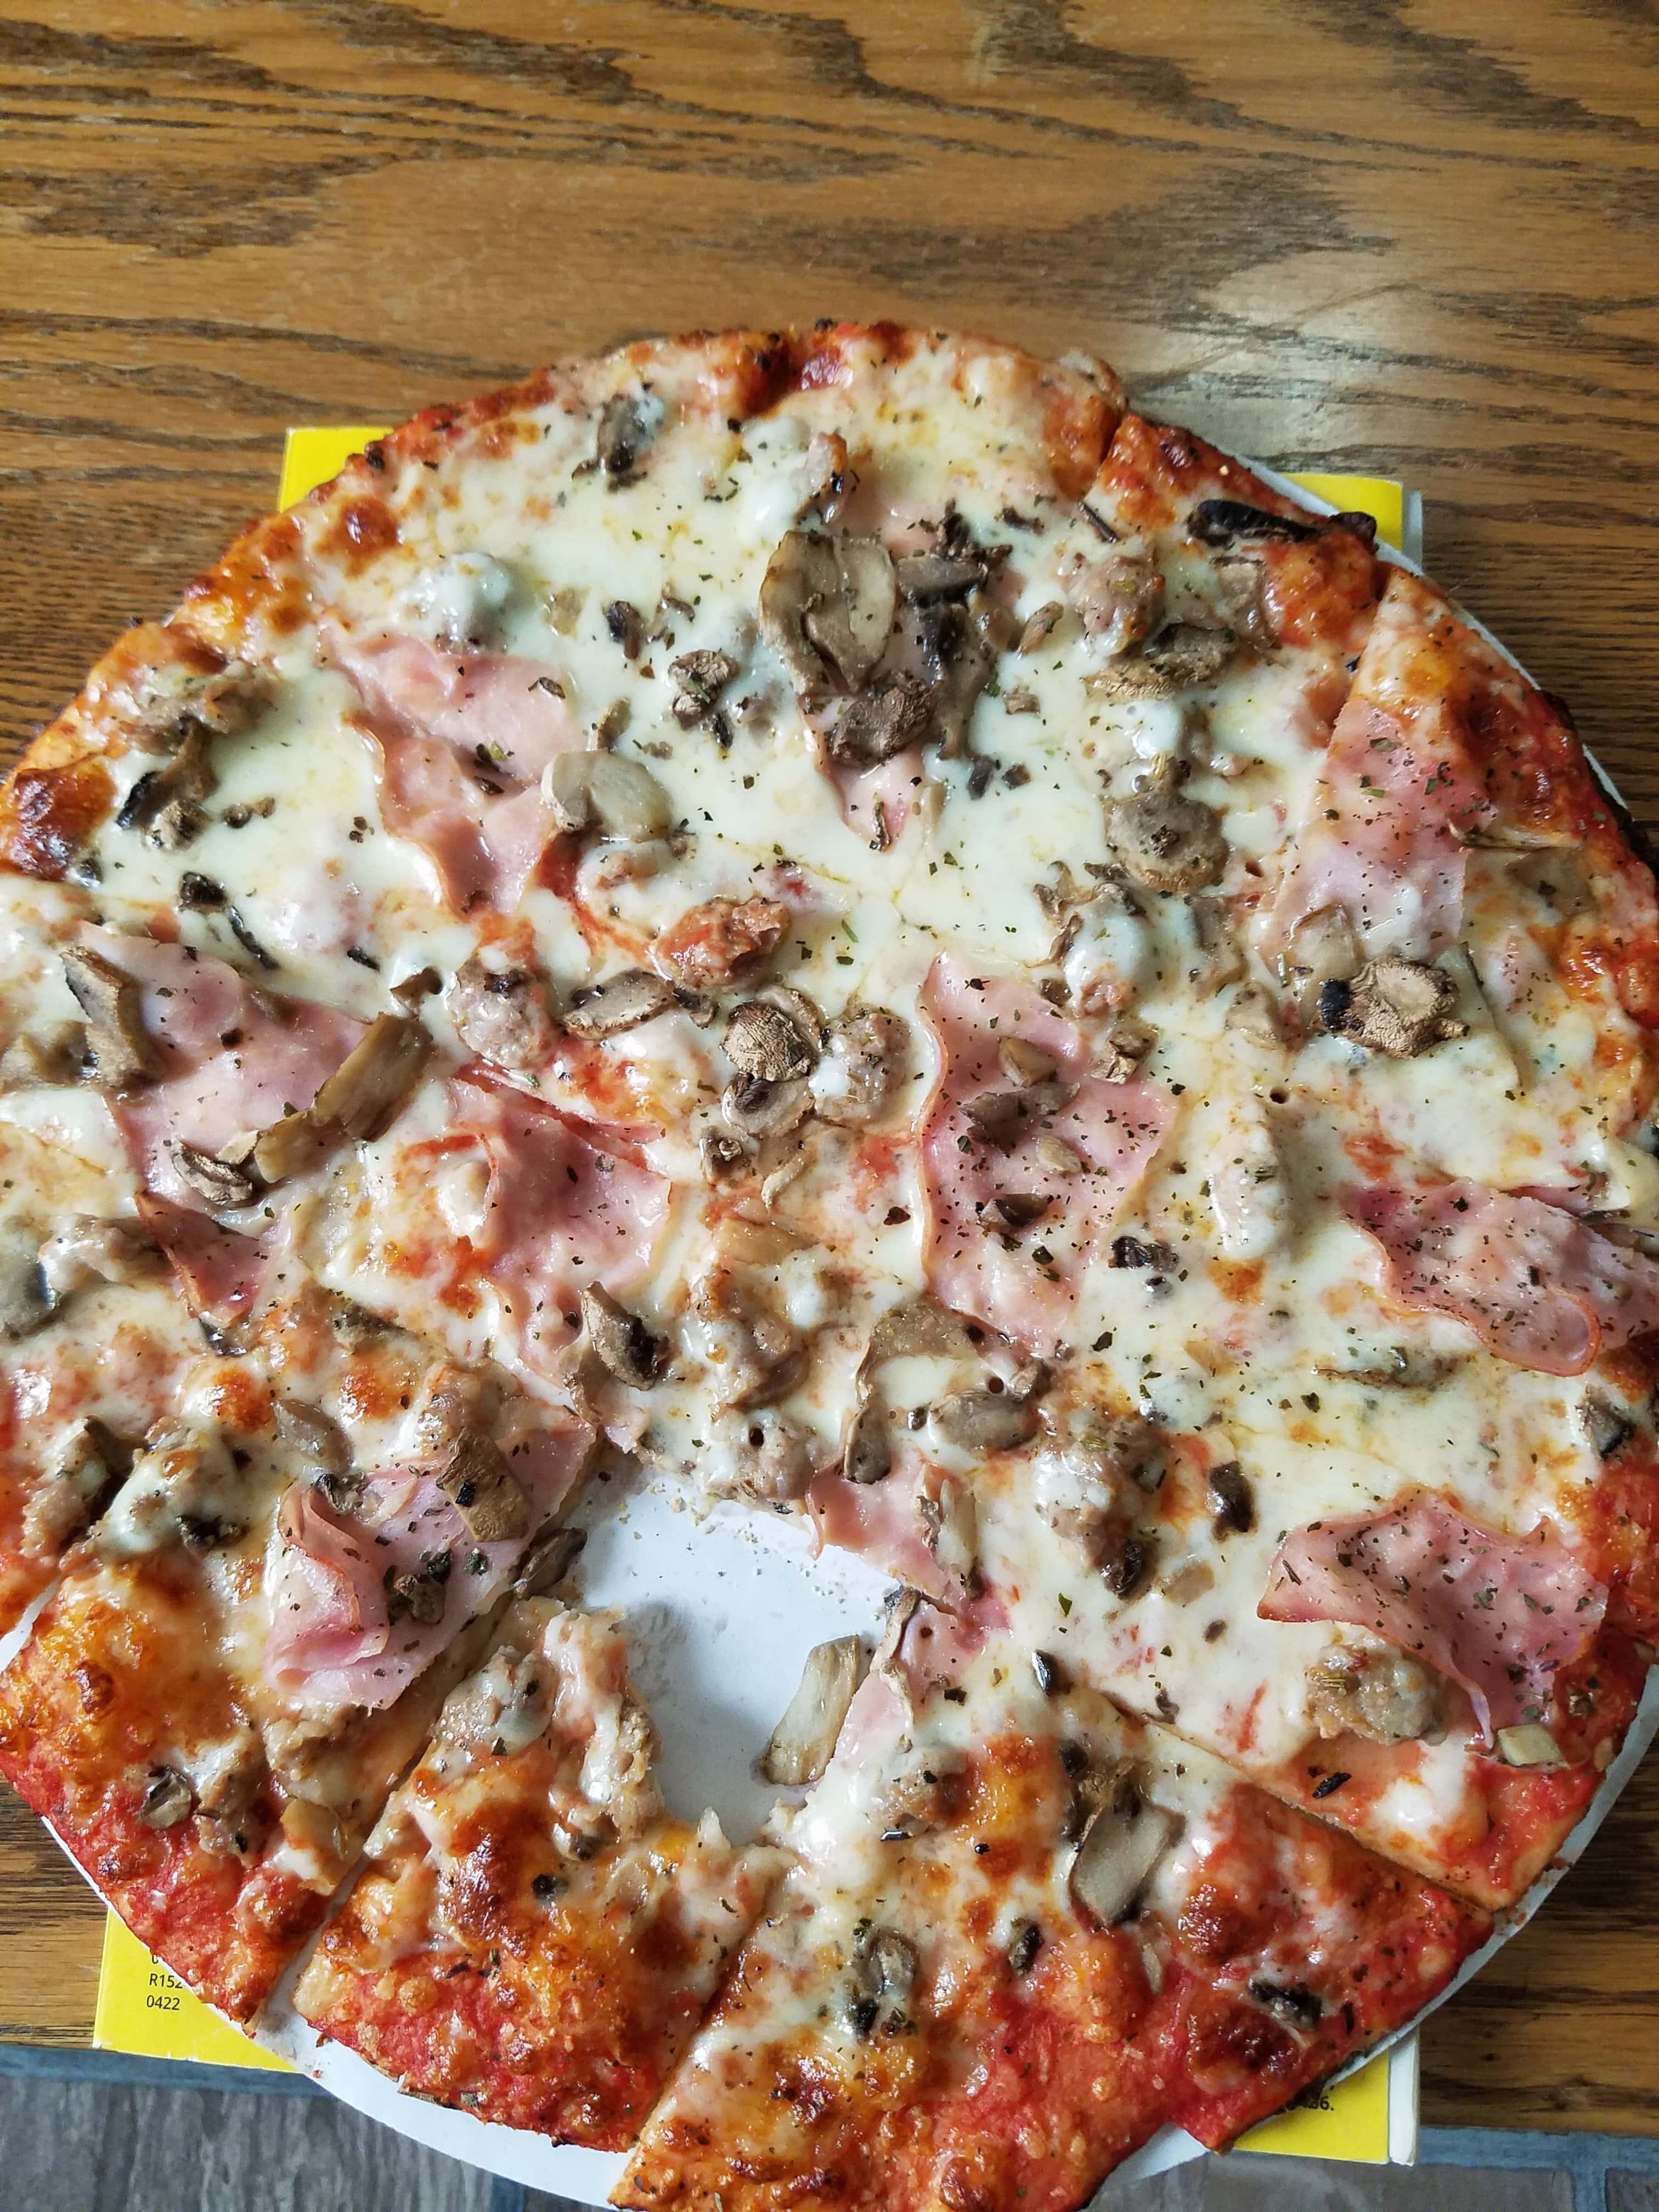 Monical's Pizza of Pontiac, US, mama's pizza